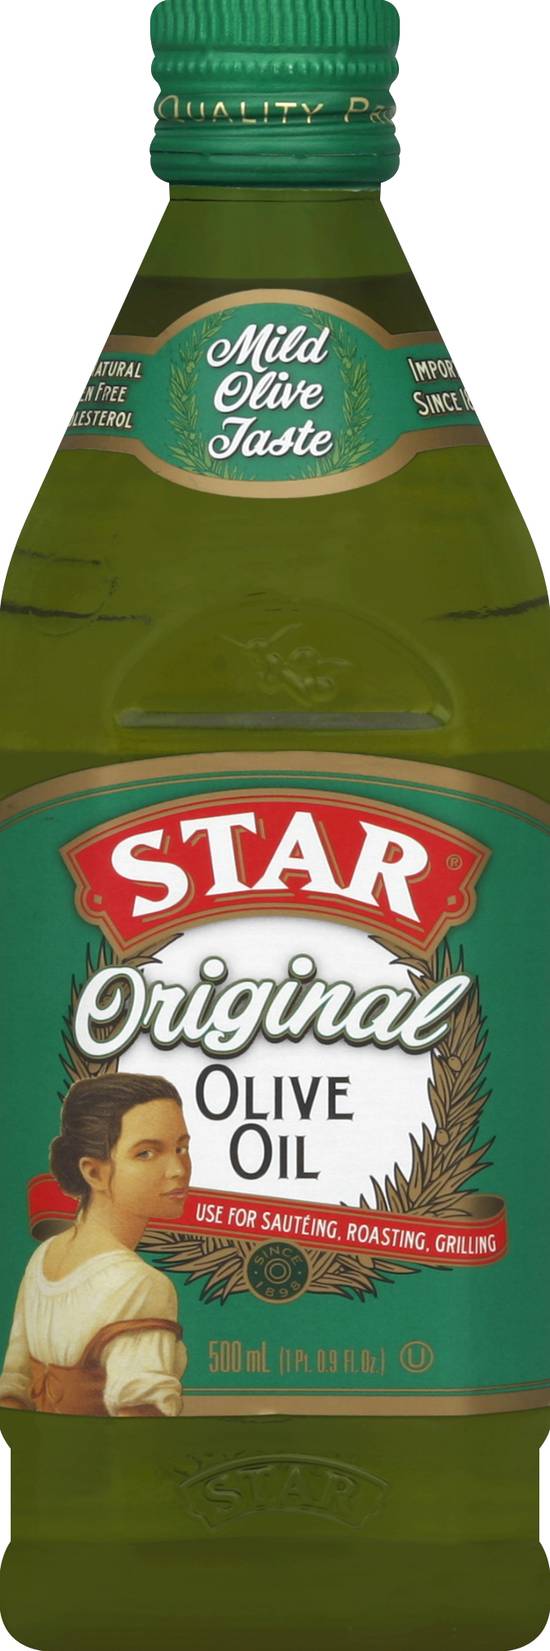 Star Original Mild Olive Taste Olive Oil